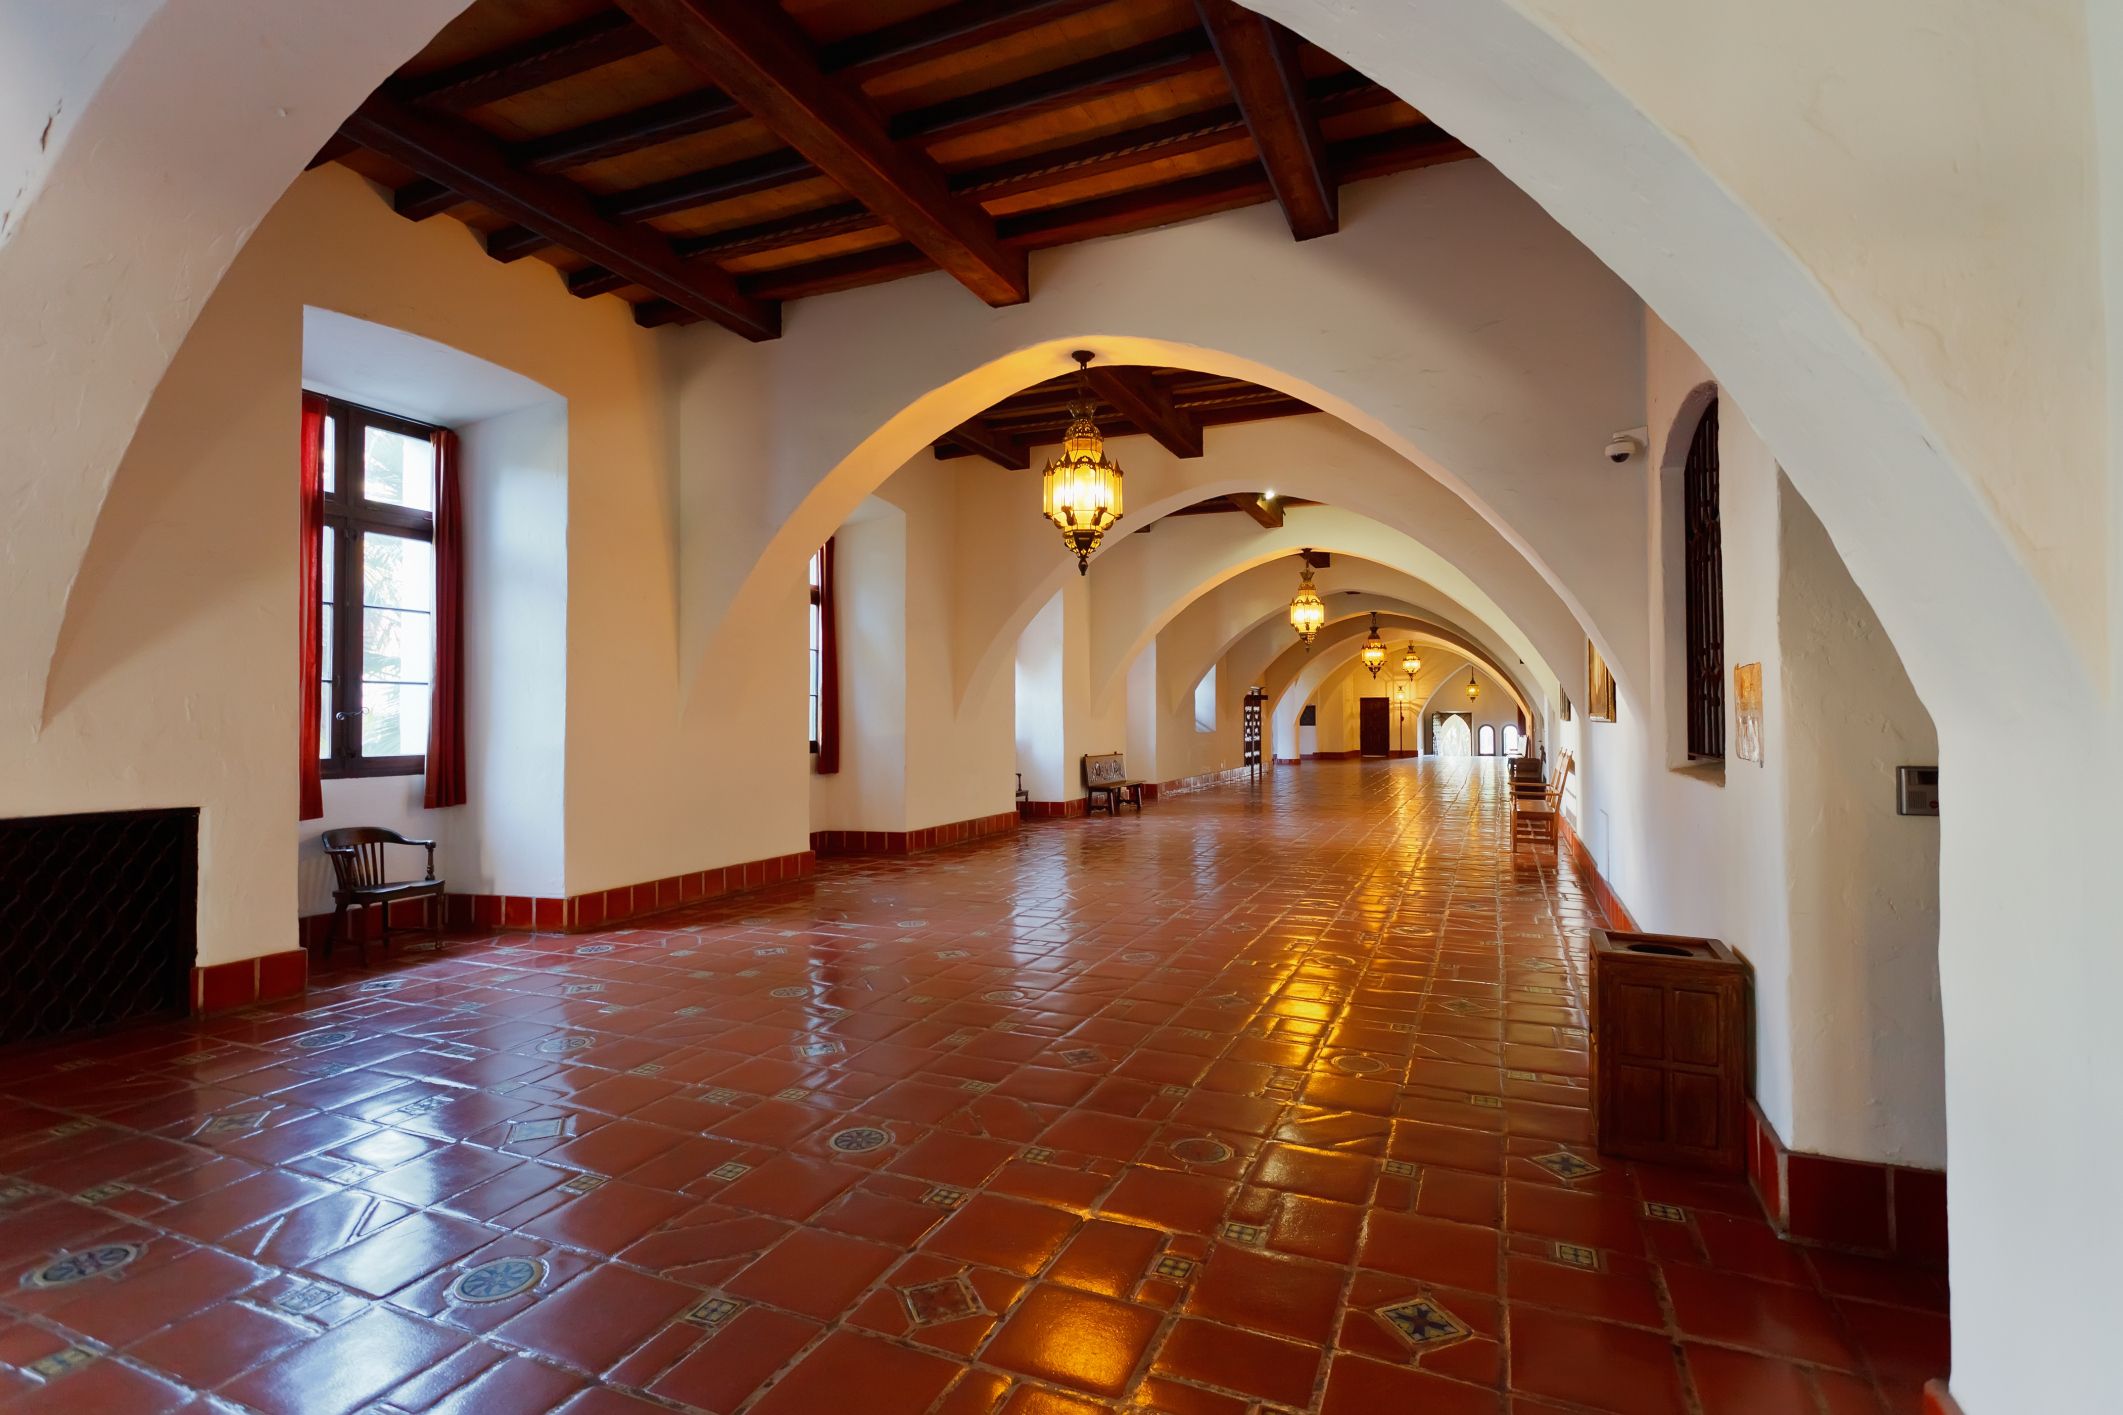 Arched Doorways And Terracotta Tiles: Architectural Hallmarks Of Mediterranean Homes